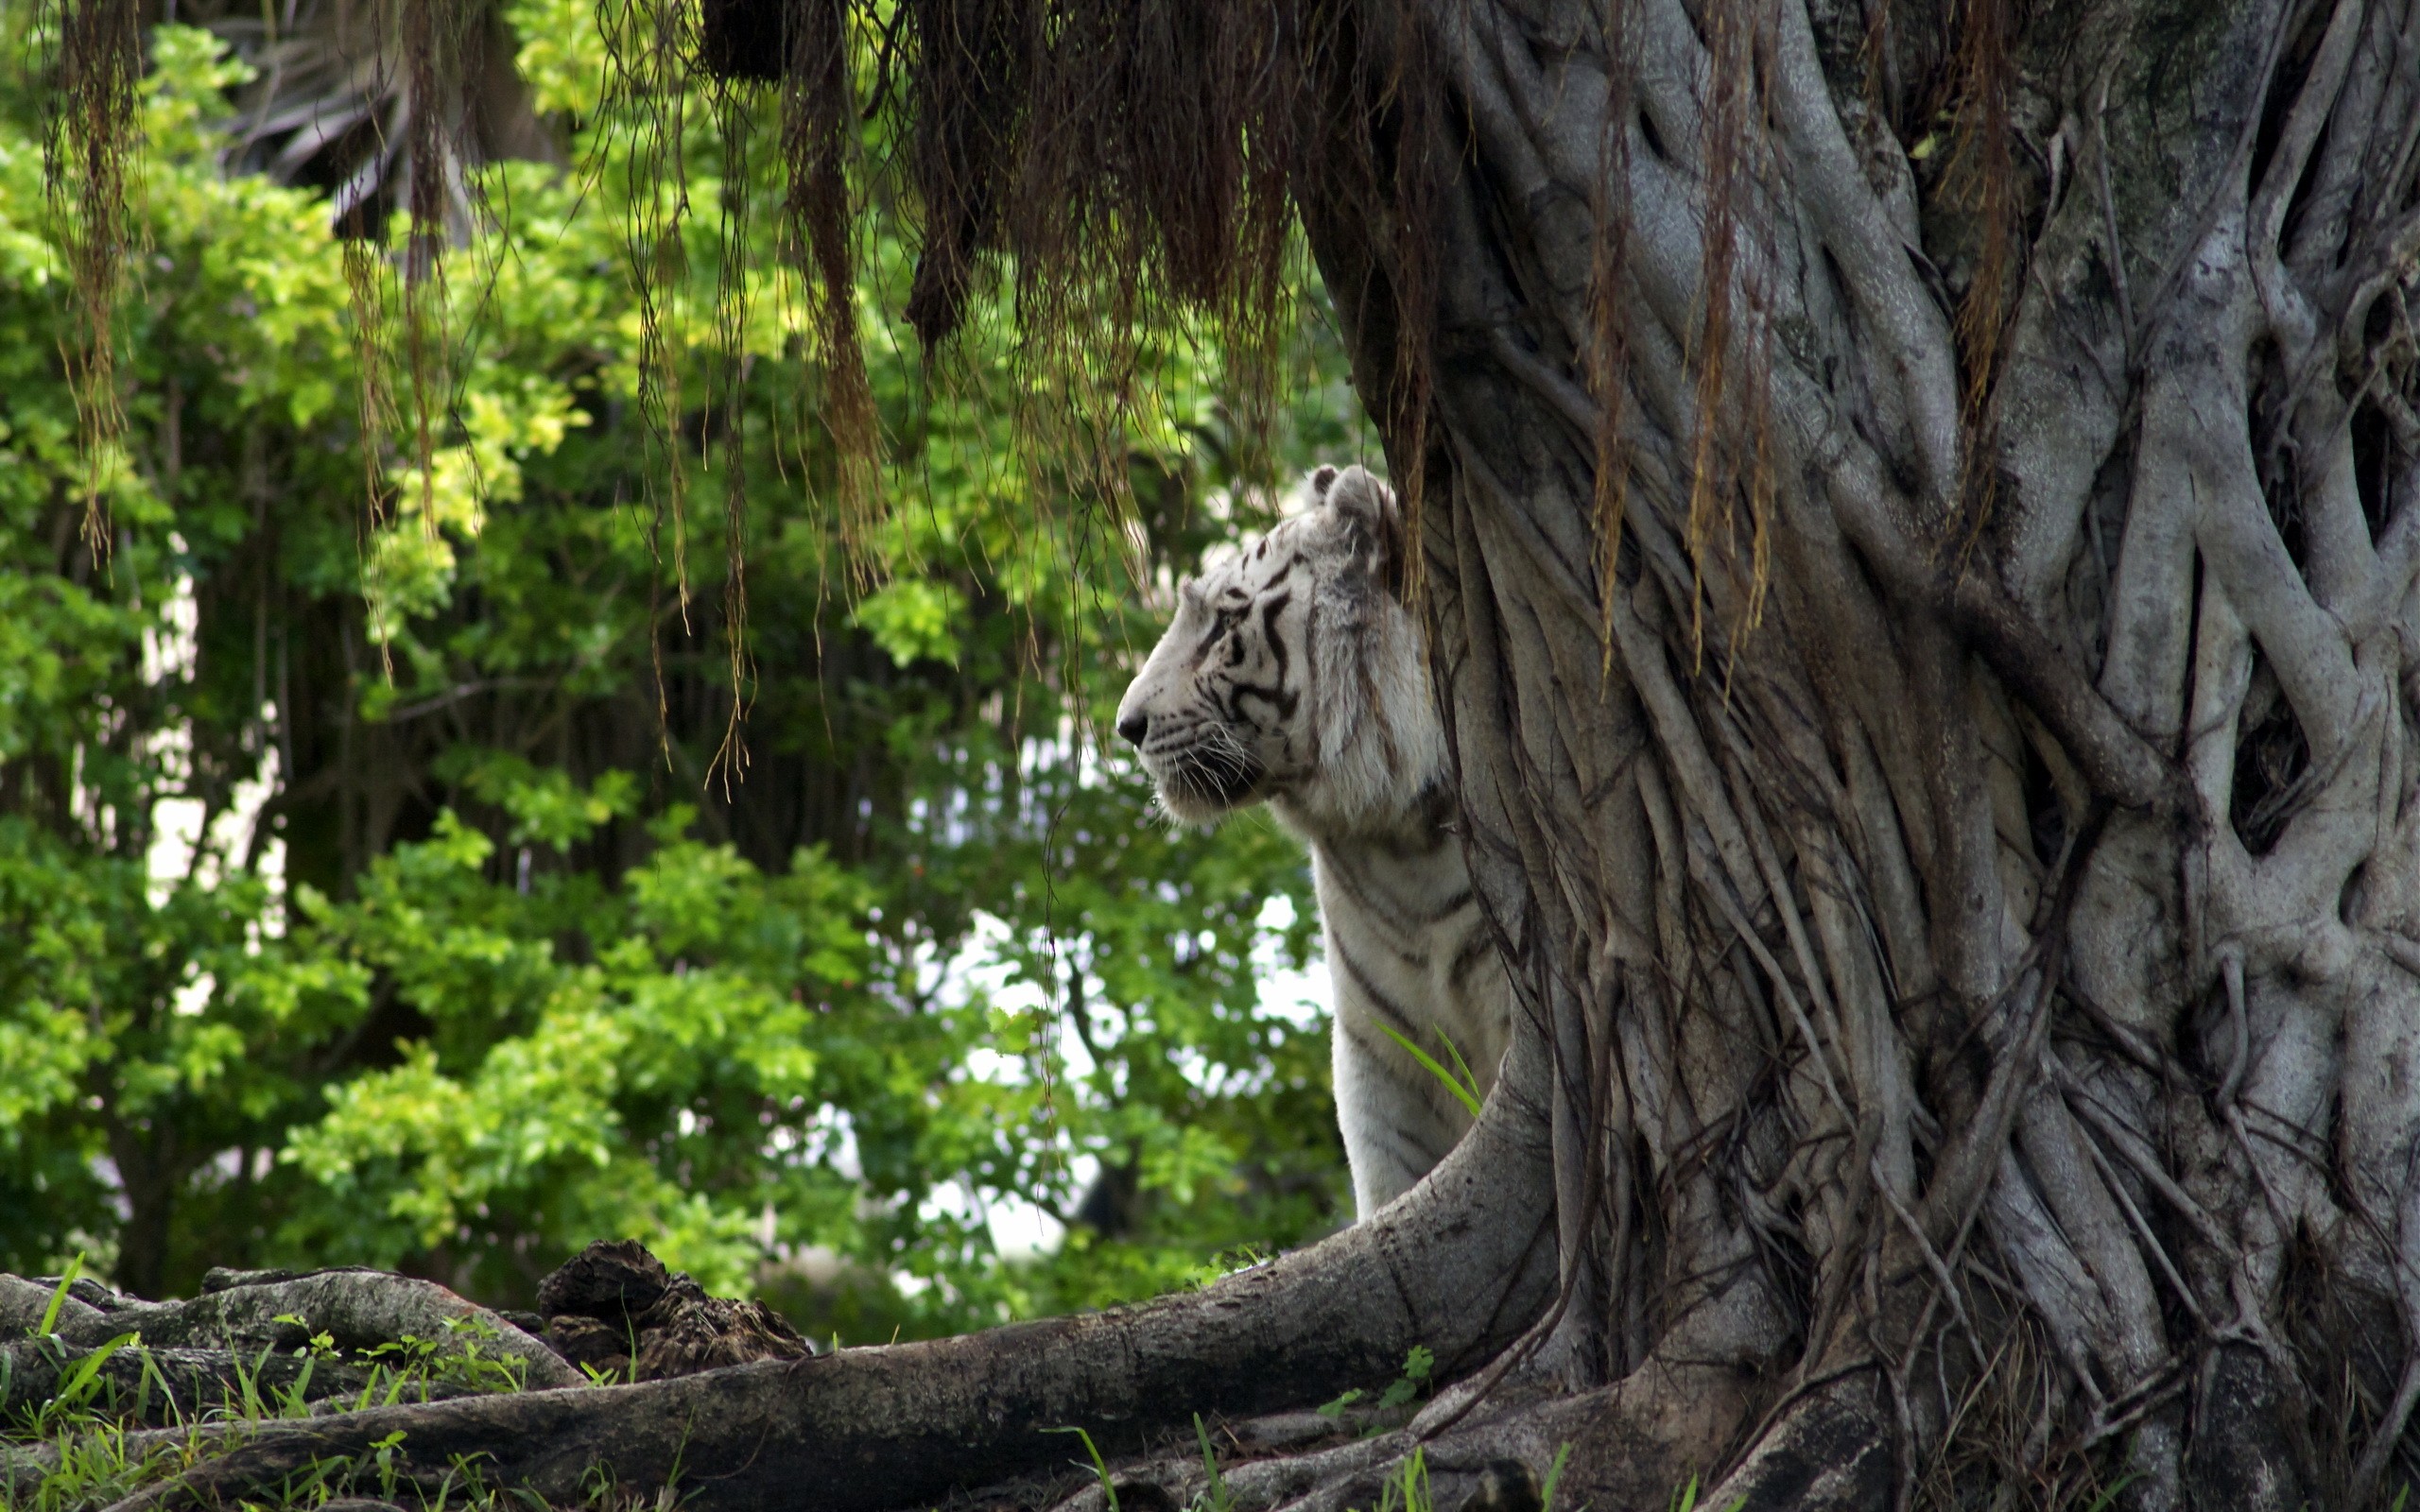 General 2560x1600 animals nature tiger white tigers big cats mammals trees